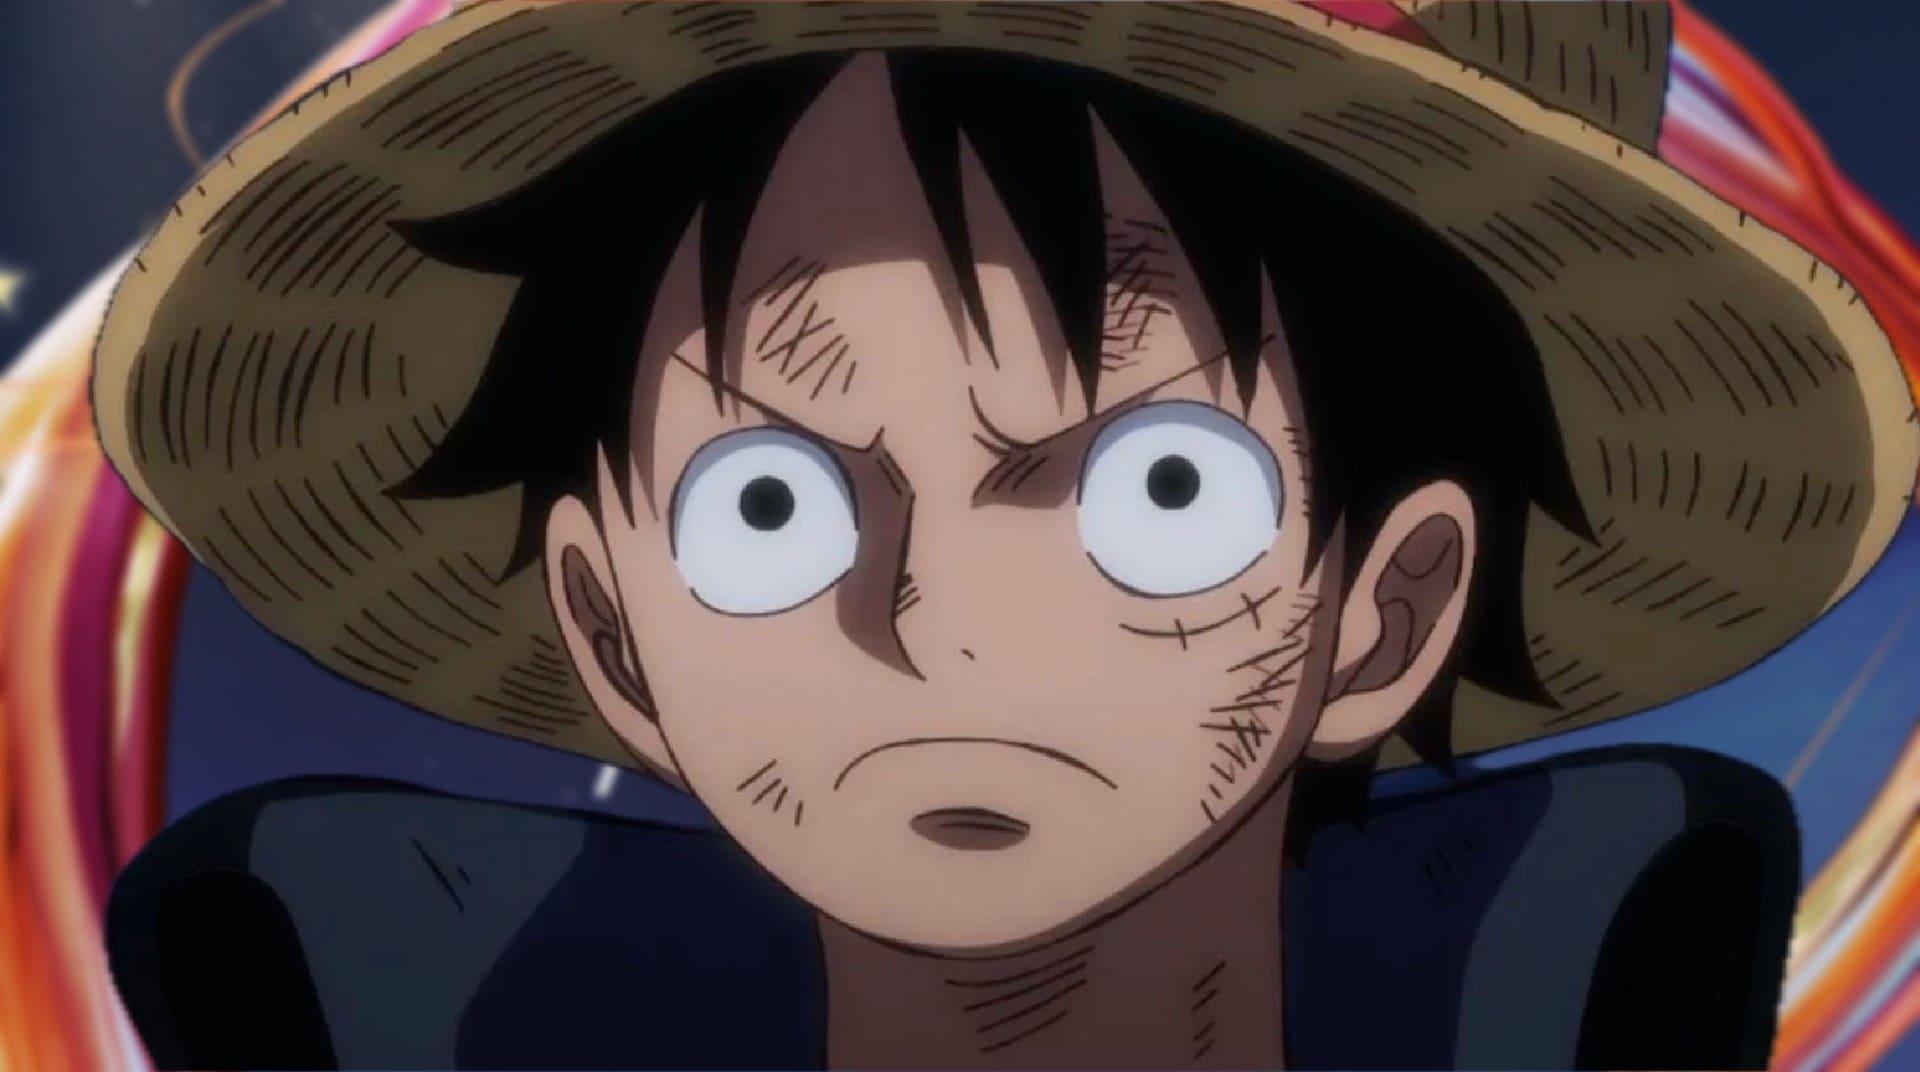 Crunchyroll Anime Awards Snub One Piece with Zero Nominations - OtakuKart